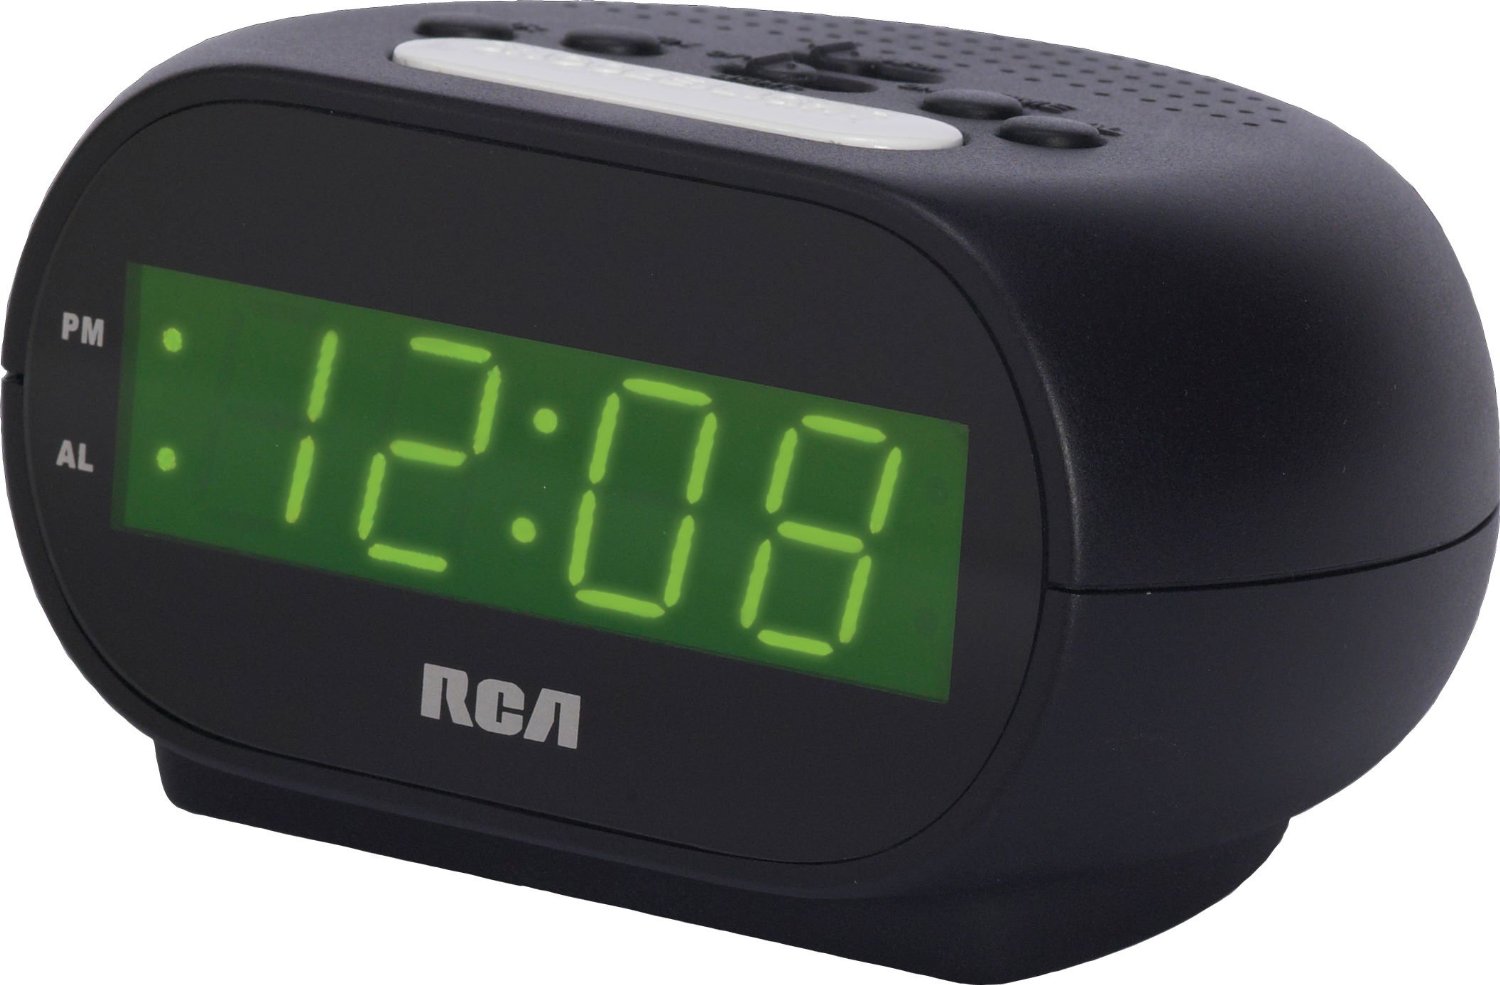 RCA Digital Alarm Clock with Night Light. 7-inch LED Display